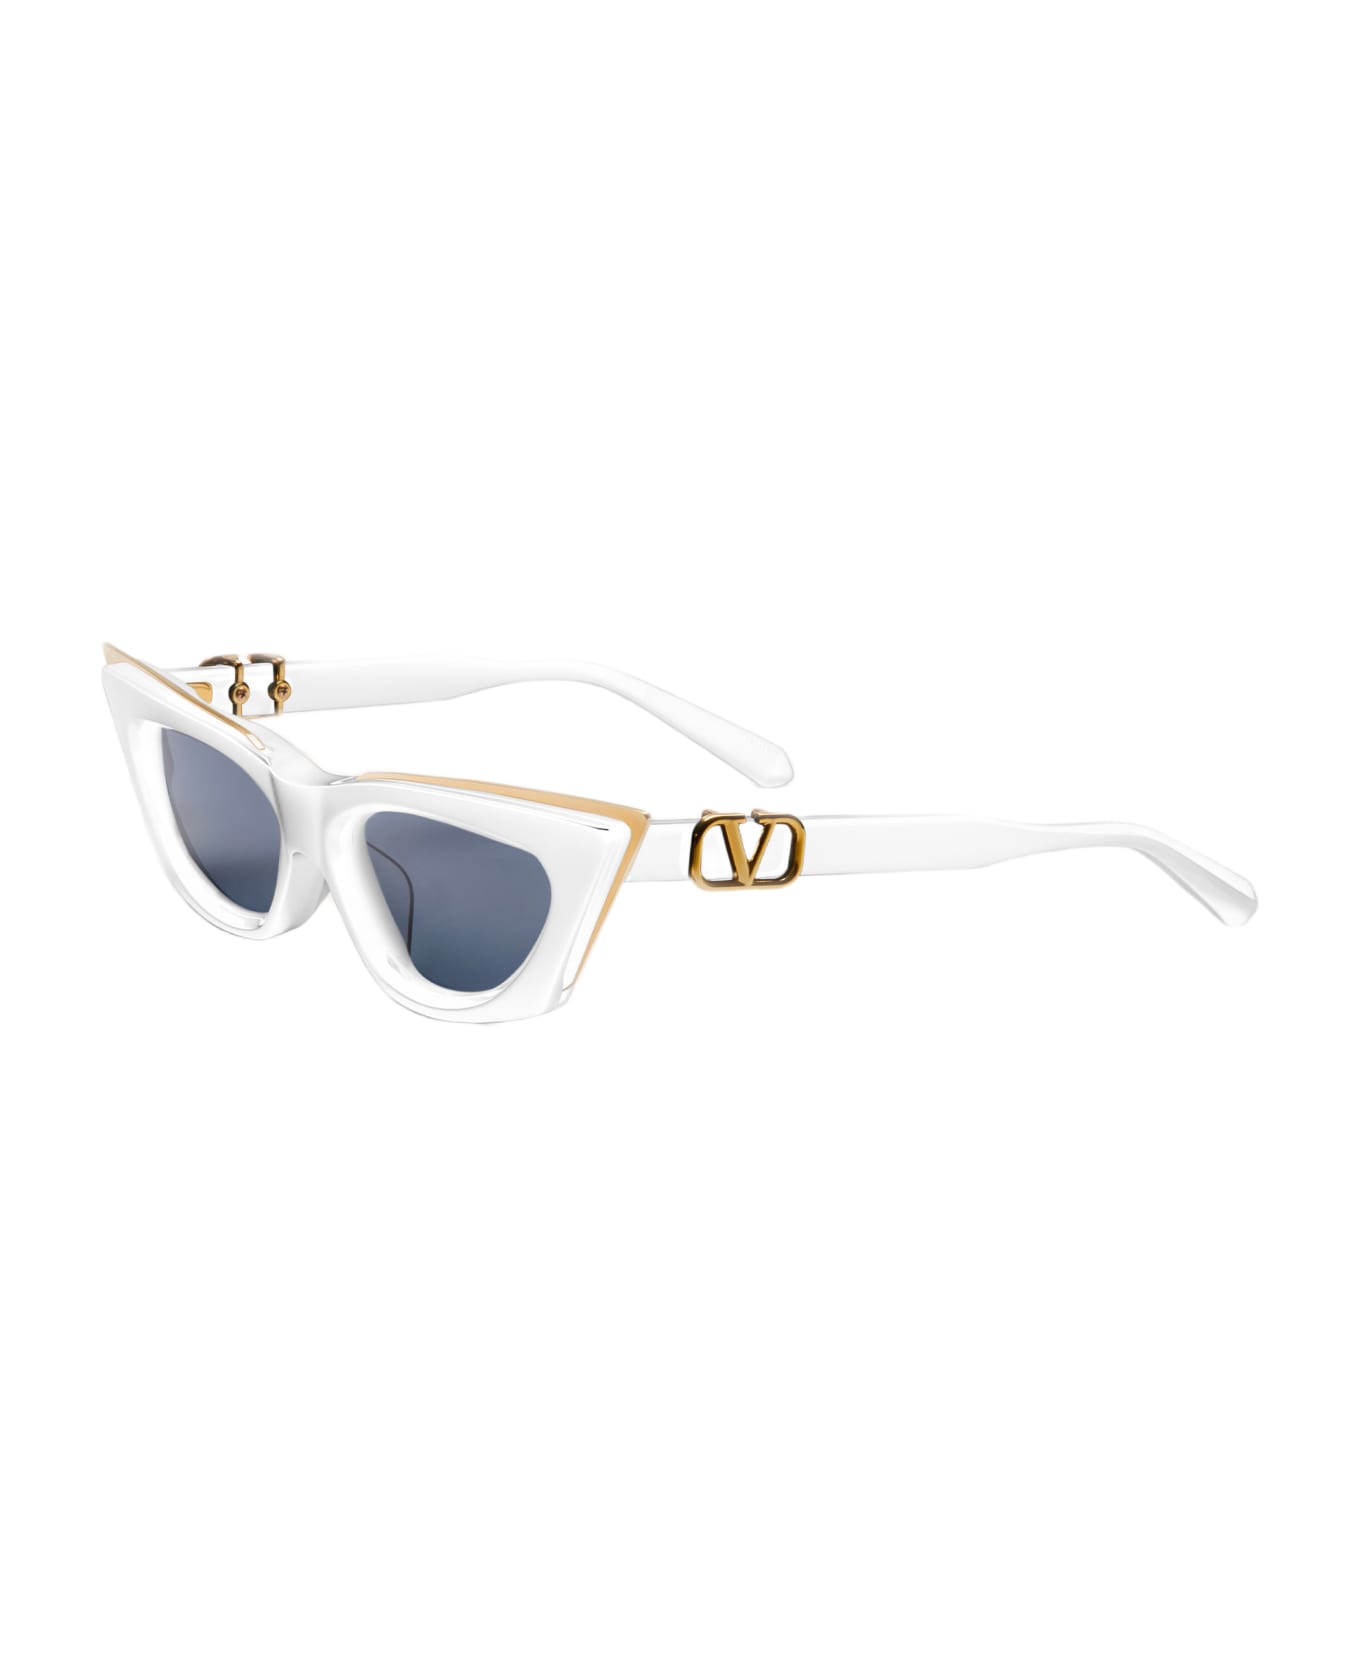 Valentino Eyewear V-goldcut I - White / Yellow Gold Sunglasses - white/gold